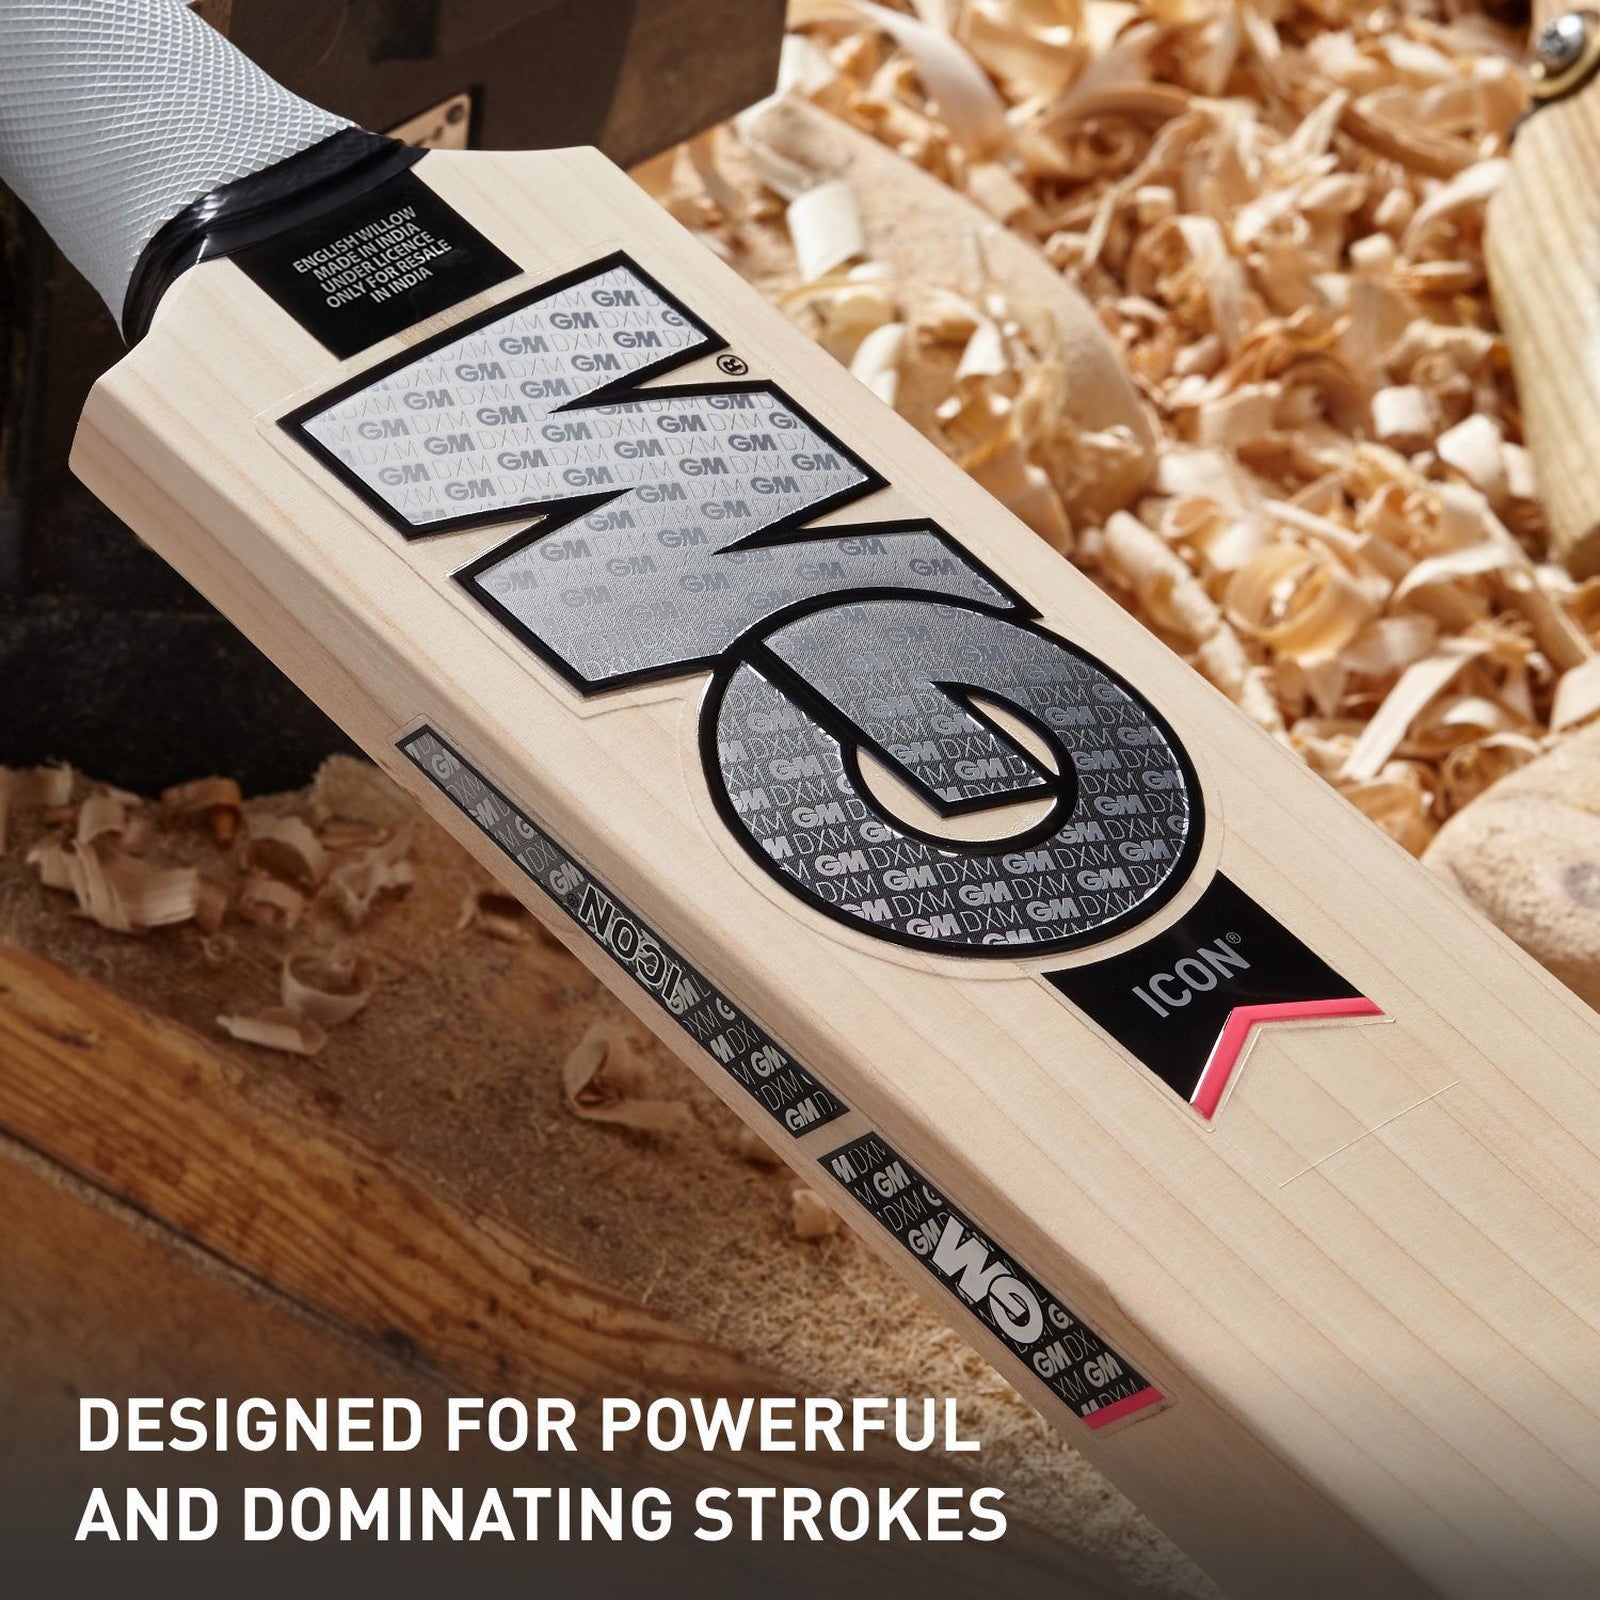 Gunn & Moore GM Icon 606 Cricket Bat - Size 4